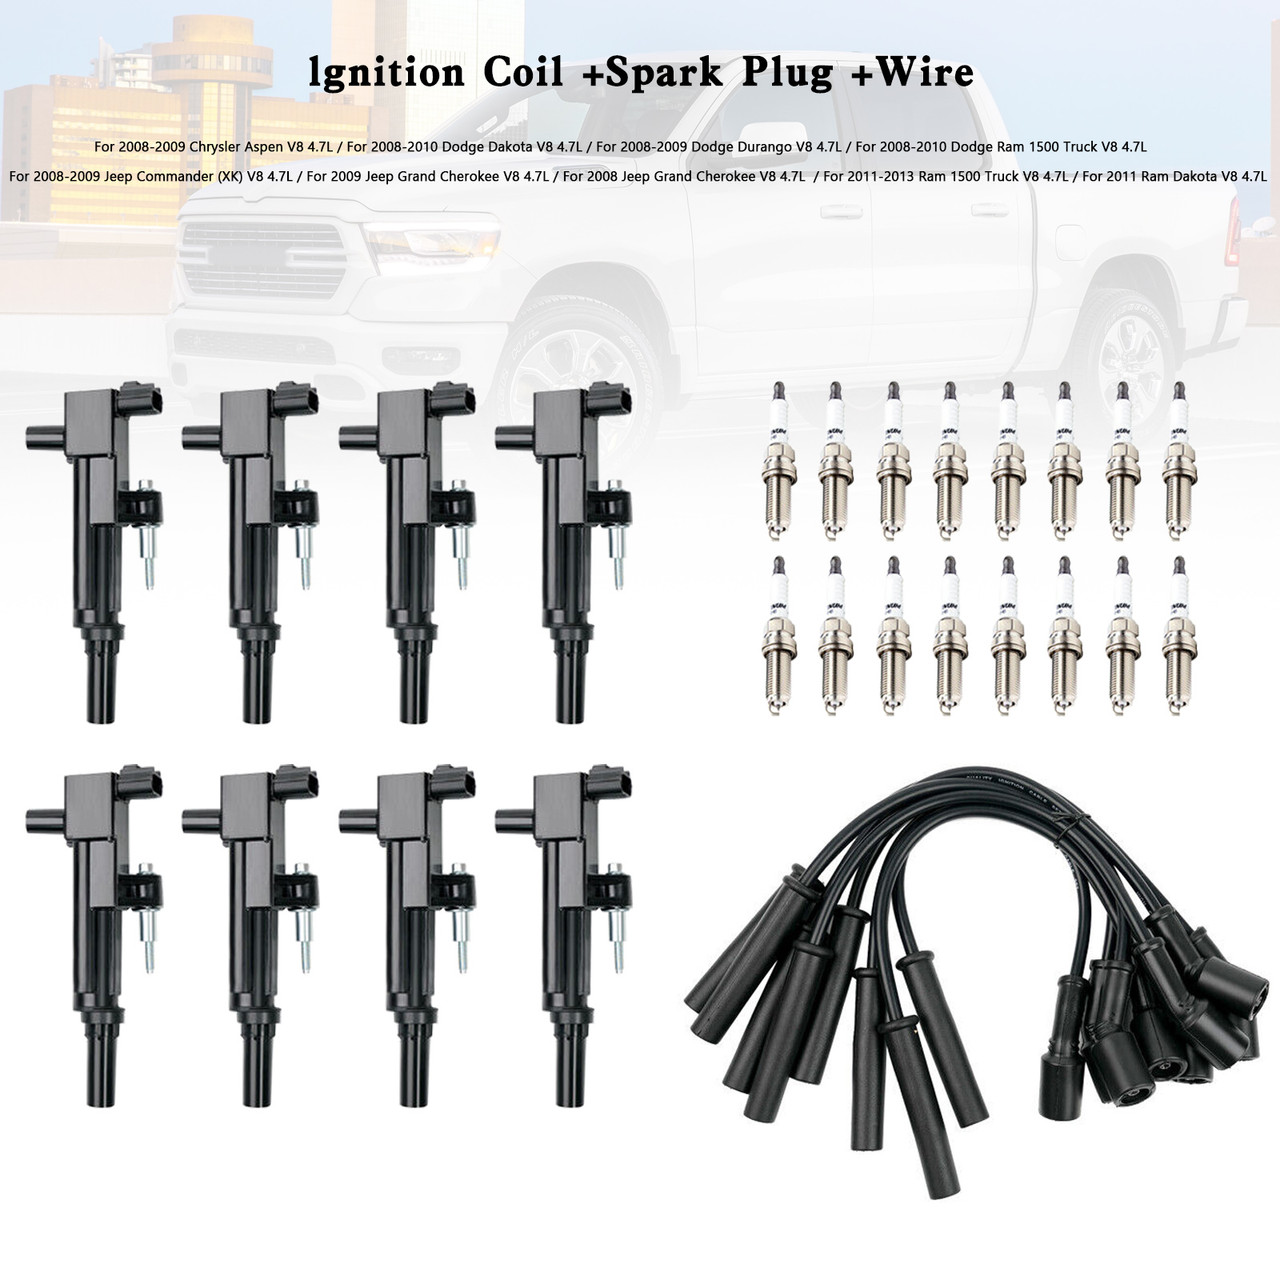 8X lgnition Coil +Spark Plug +Wire UF601 For Dodge Durango Dakota Ram 1500